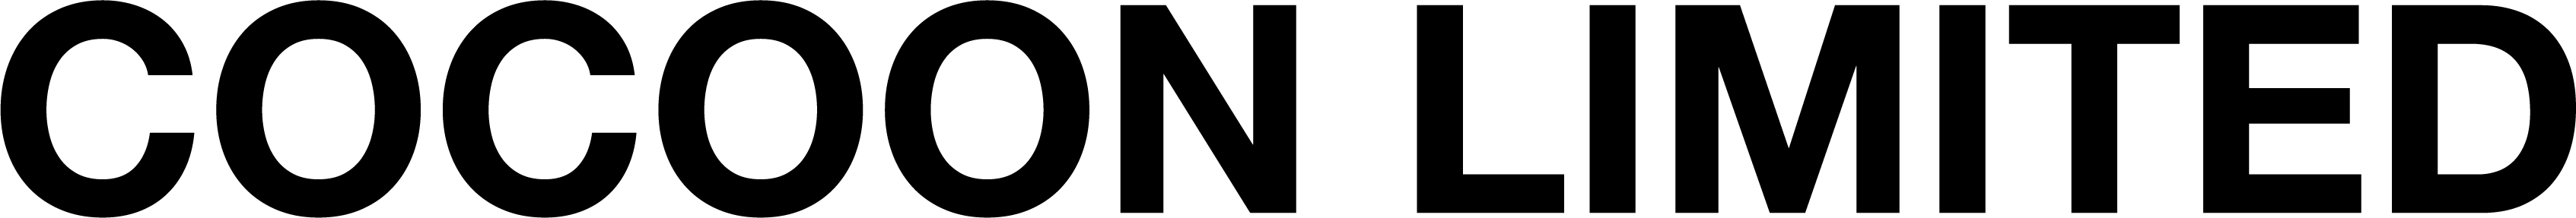 COCOON LIMITED web logo black